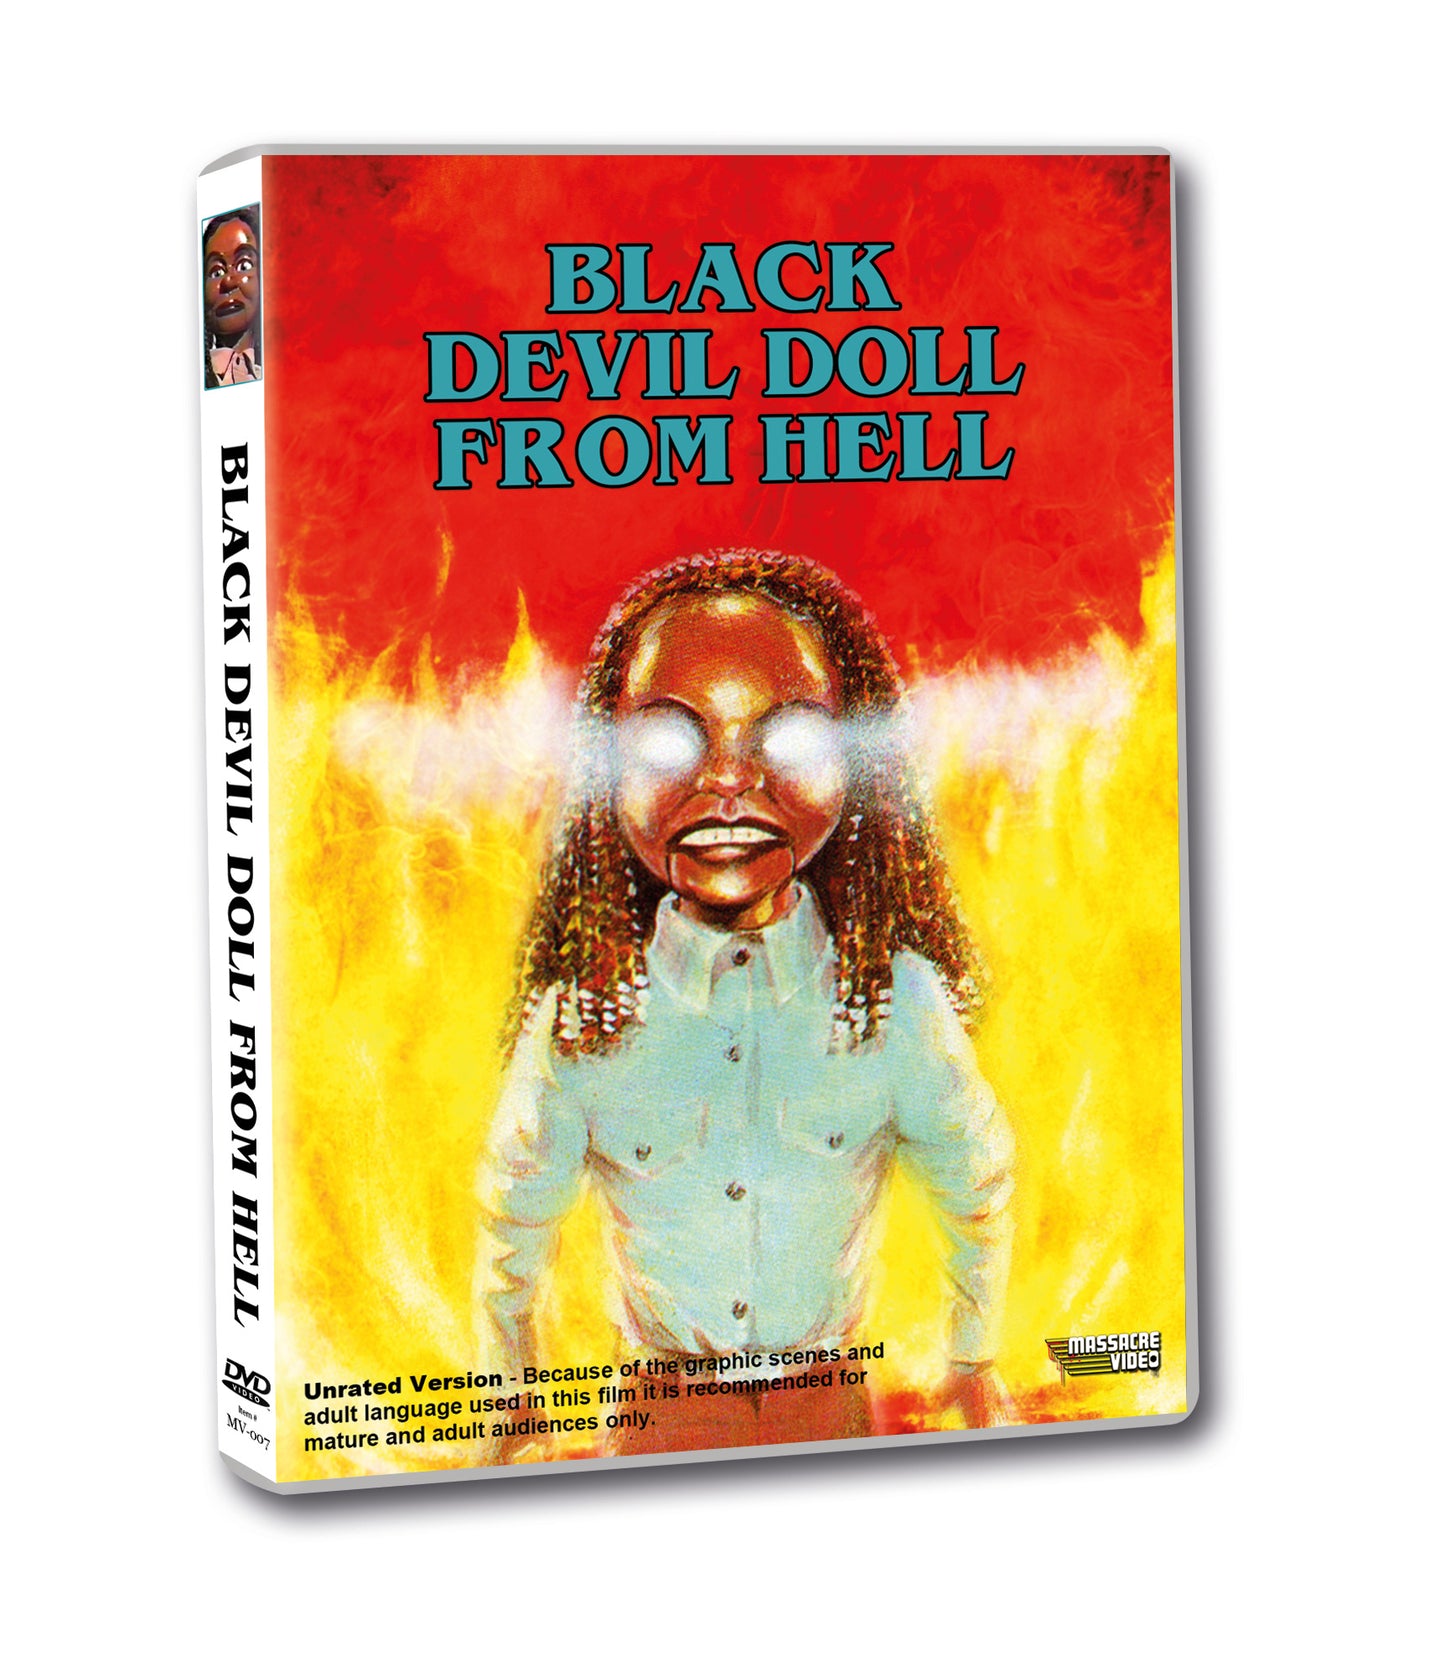 Black Devil Doll from Hell Massacre Video DVD [NEW]